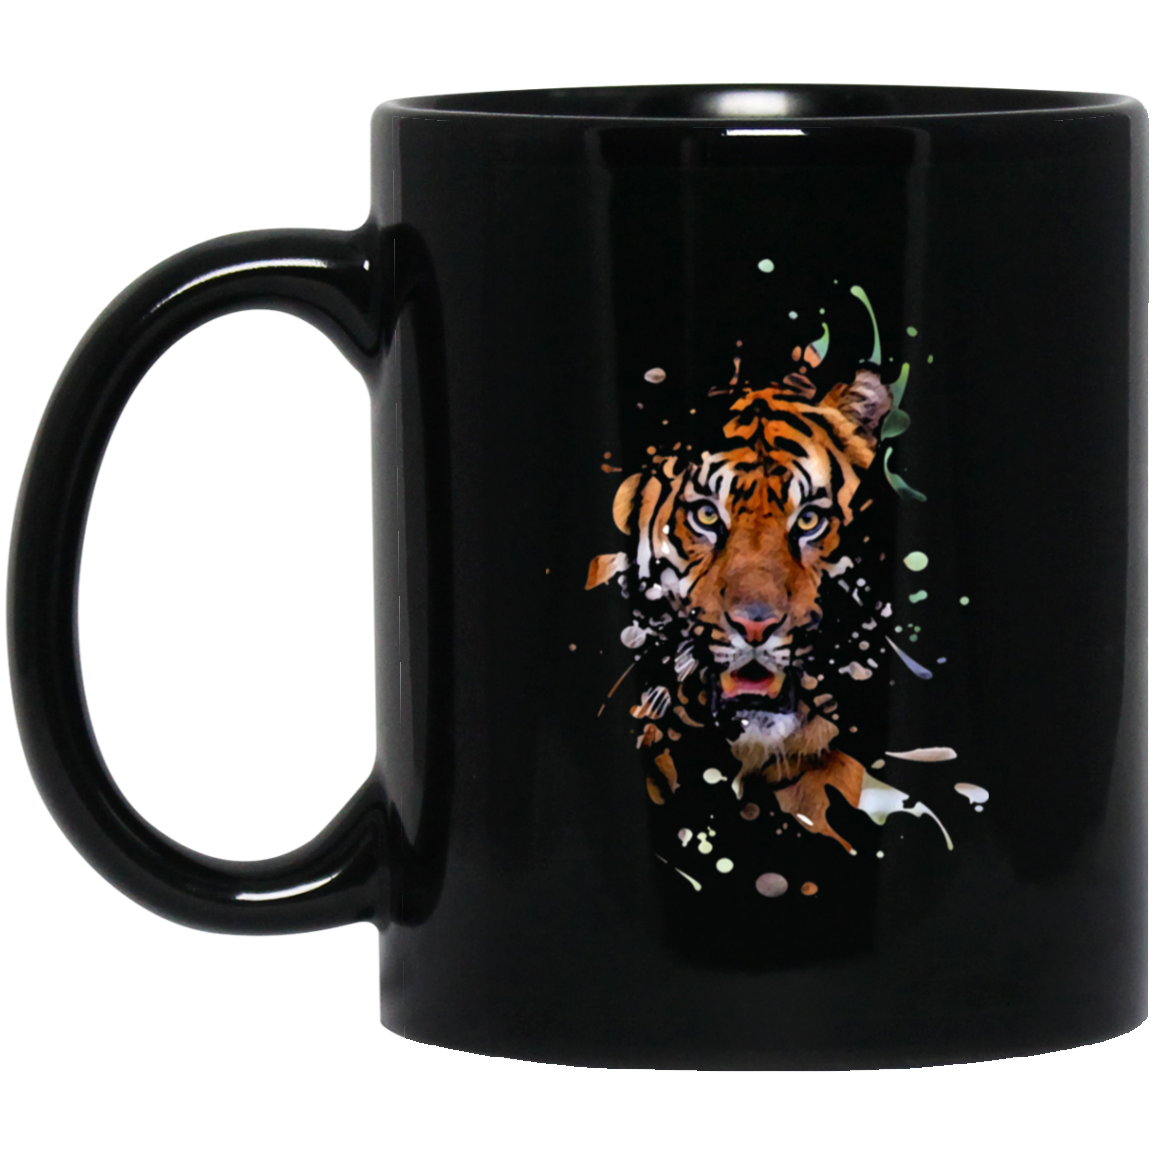 Disappearing Tiger - Mugs